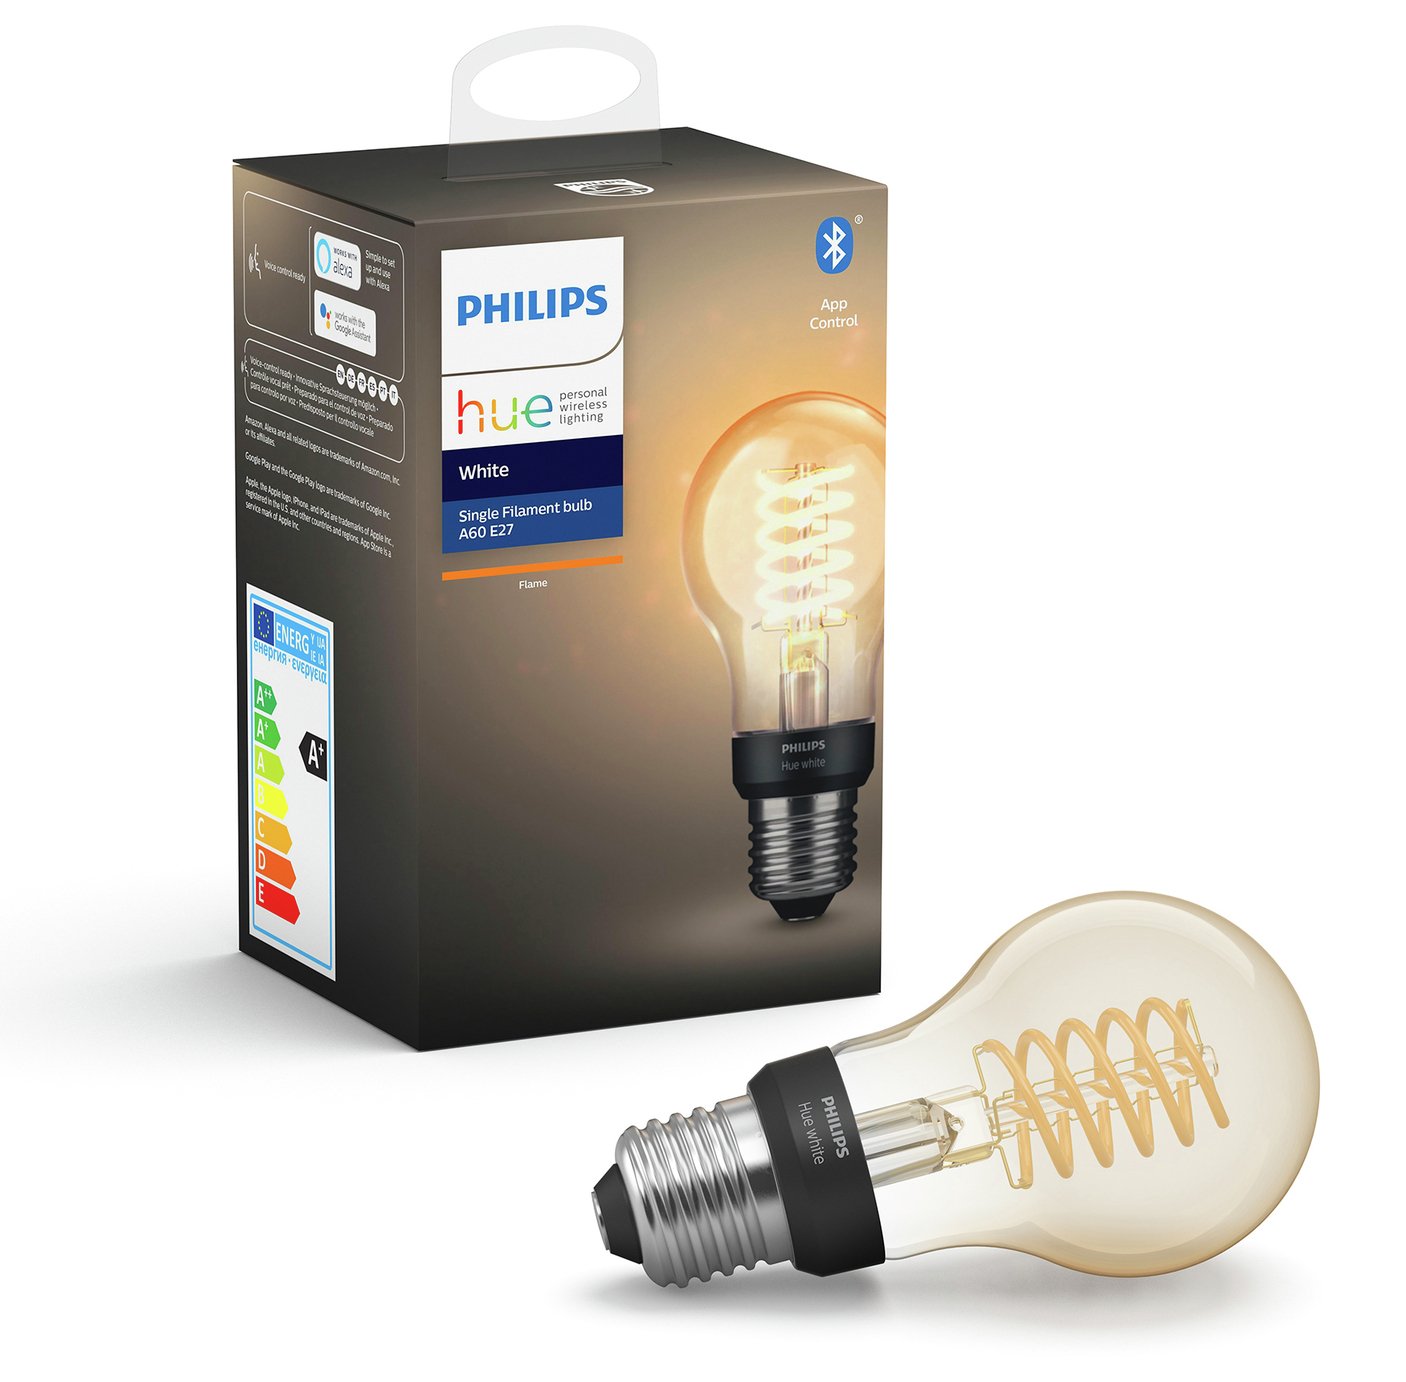 Philips Hue E27 White Smart Filament Bulb with Bluetooth